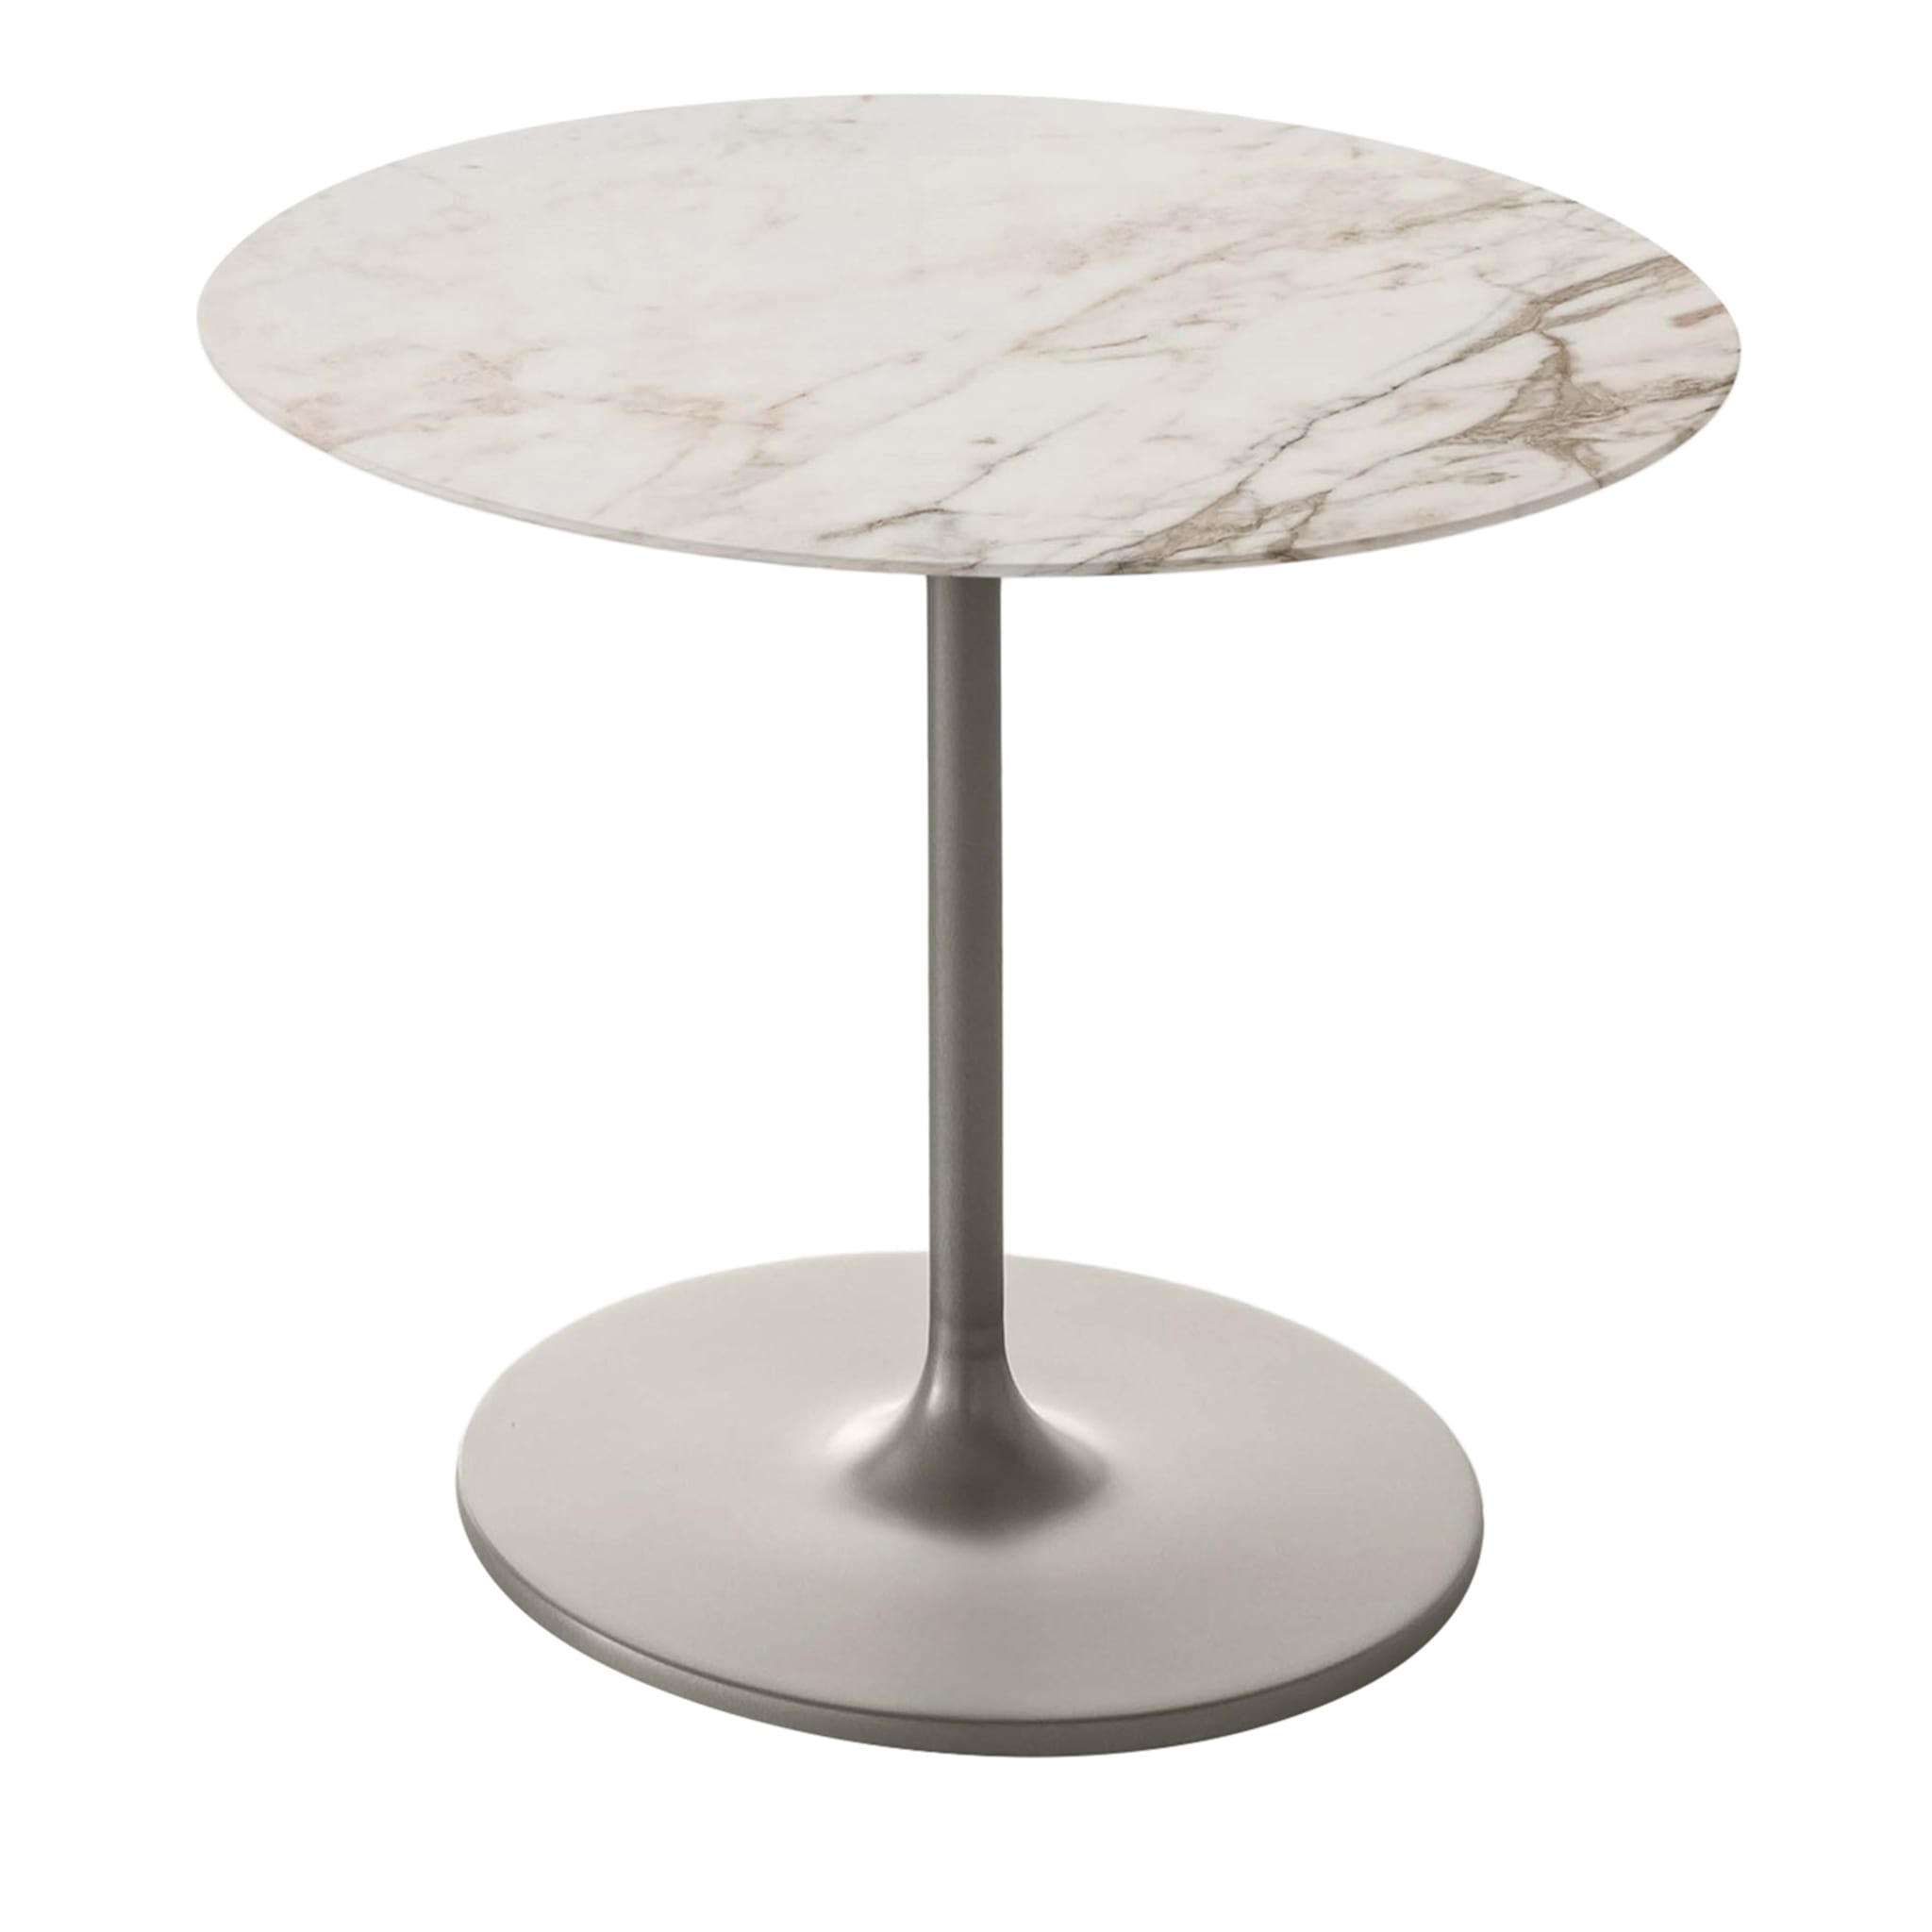 Table d'appoint ronde Glow en marbre Calacatta par Giuseppe Bavuso - Vue principale